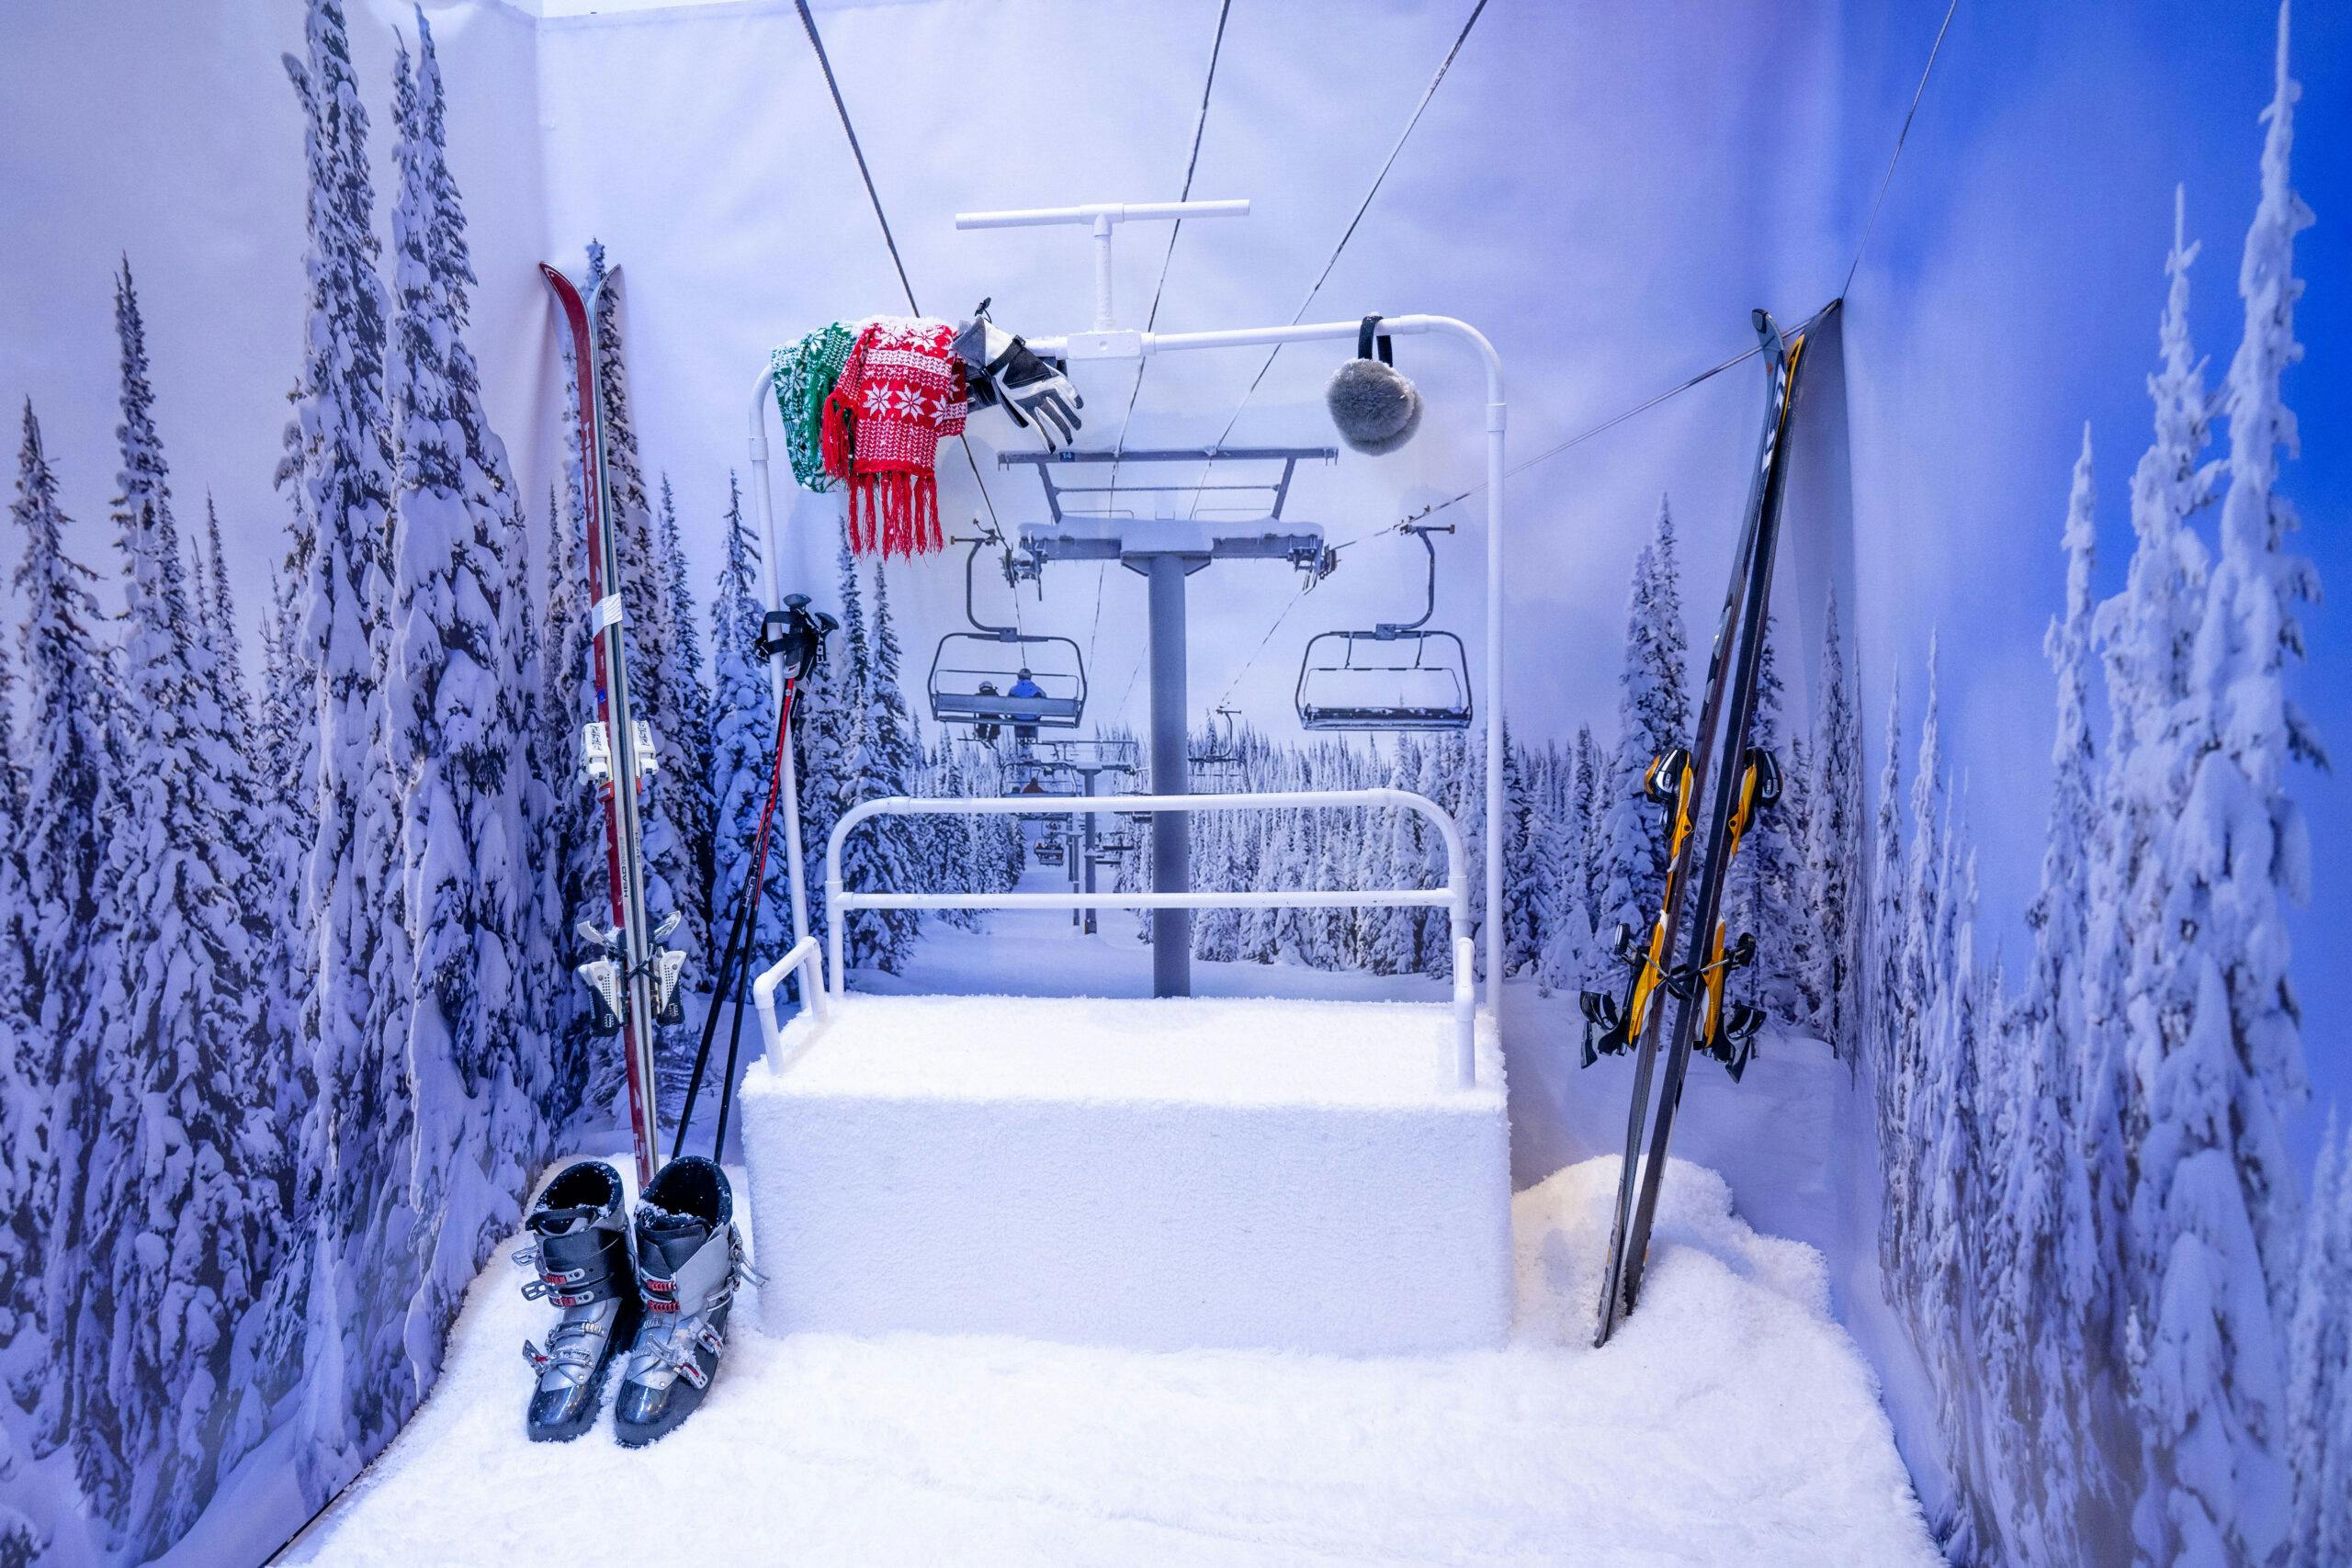 Apres Ski Holiday Party Ideas